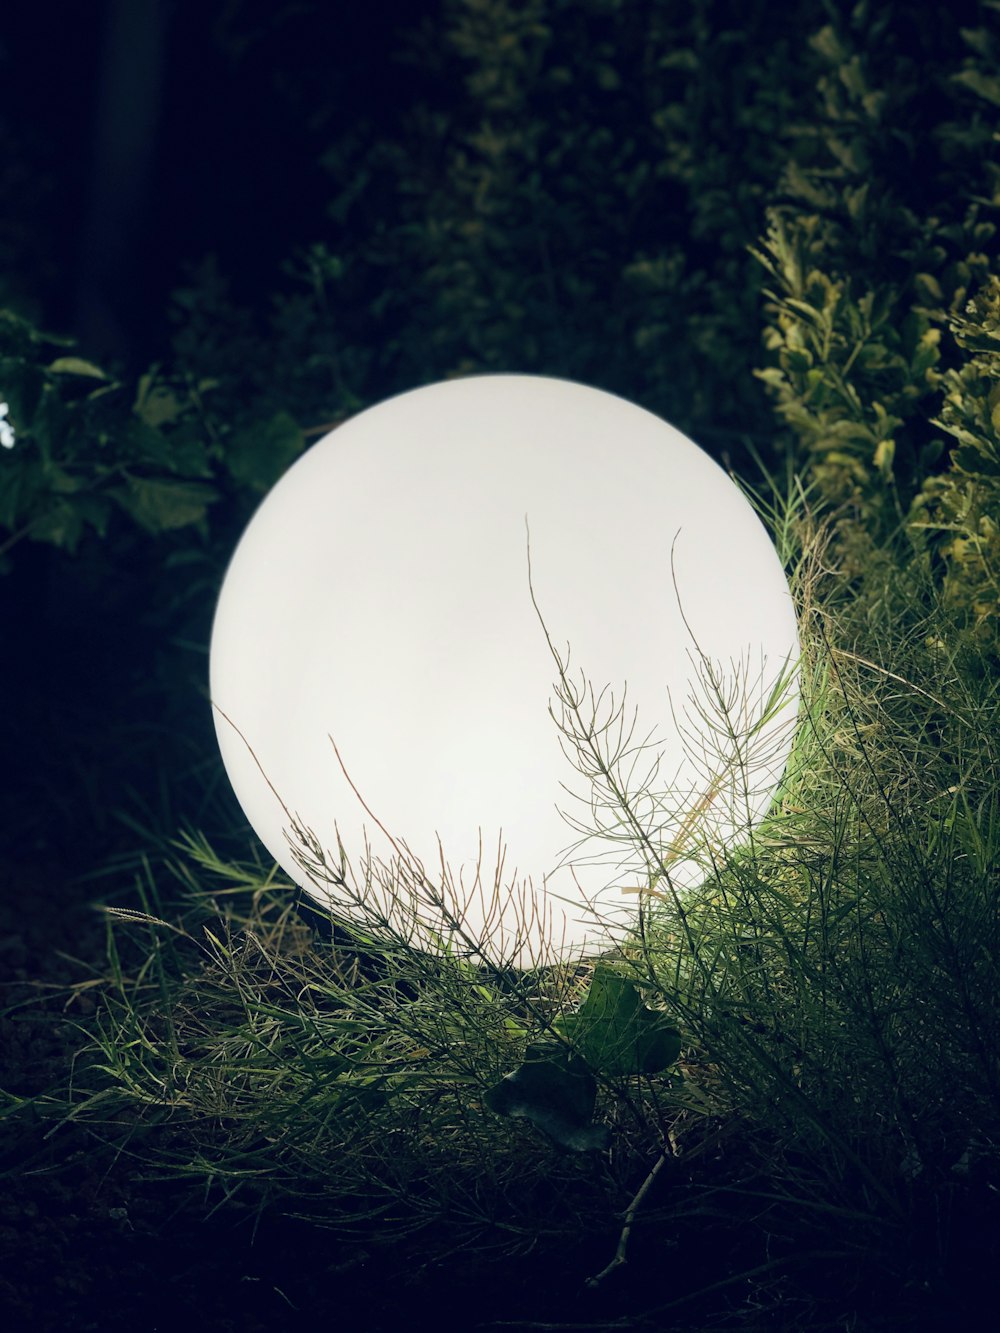 white round ball on green grass